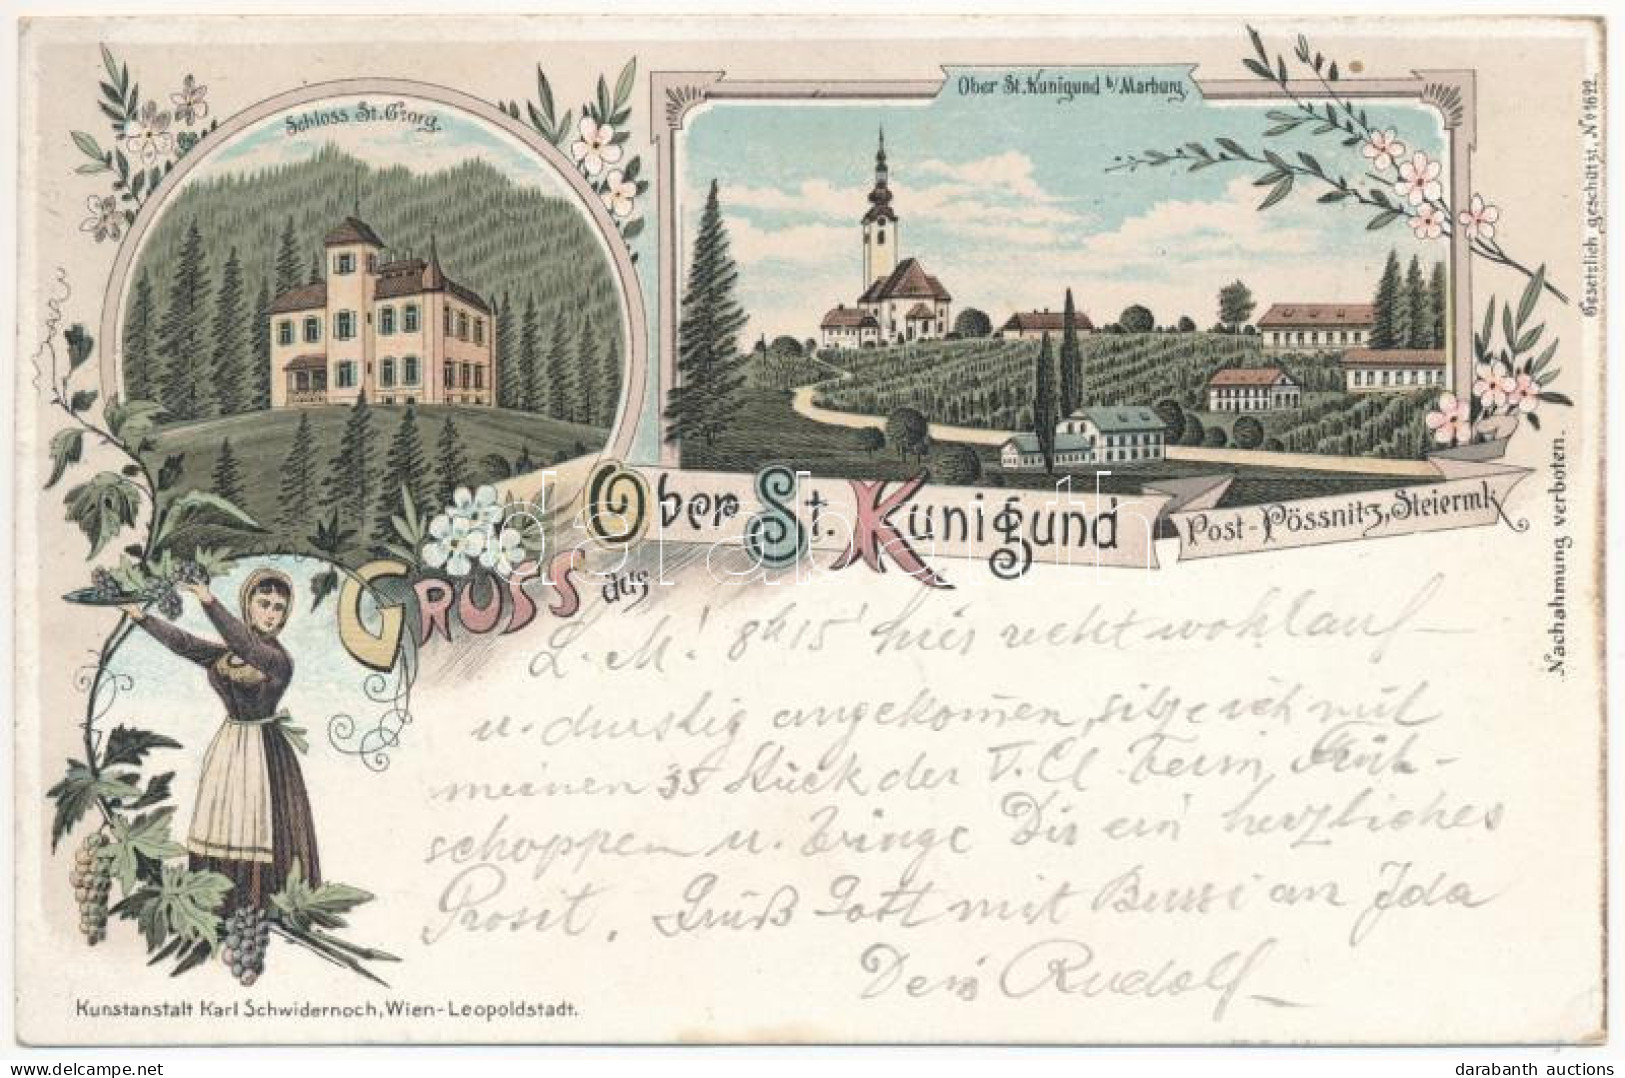 T2 1898 (Vorläufer) Kungota, Sankt Kunigund; Ober St. Kunigund, Schloss St. Georg / Castle, Church. Kunstanstalt Karl Sc - Unclassified